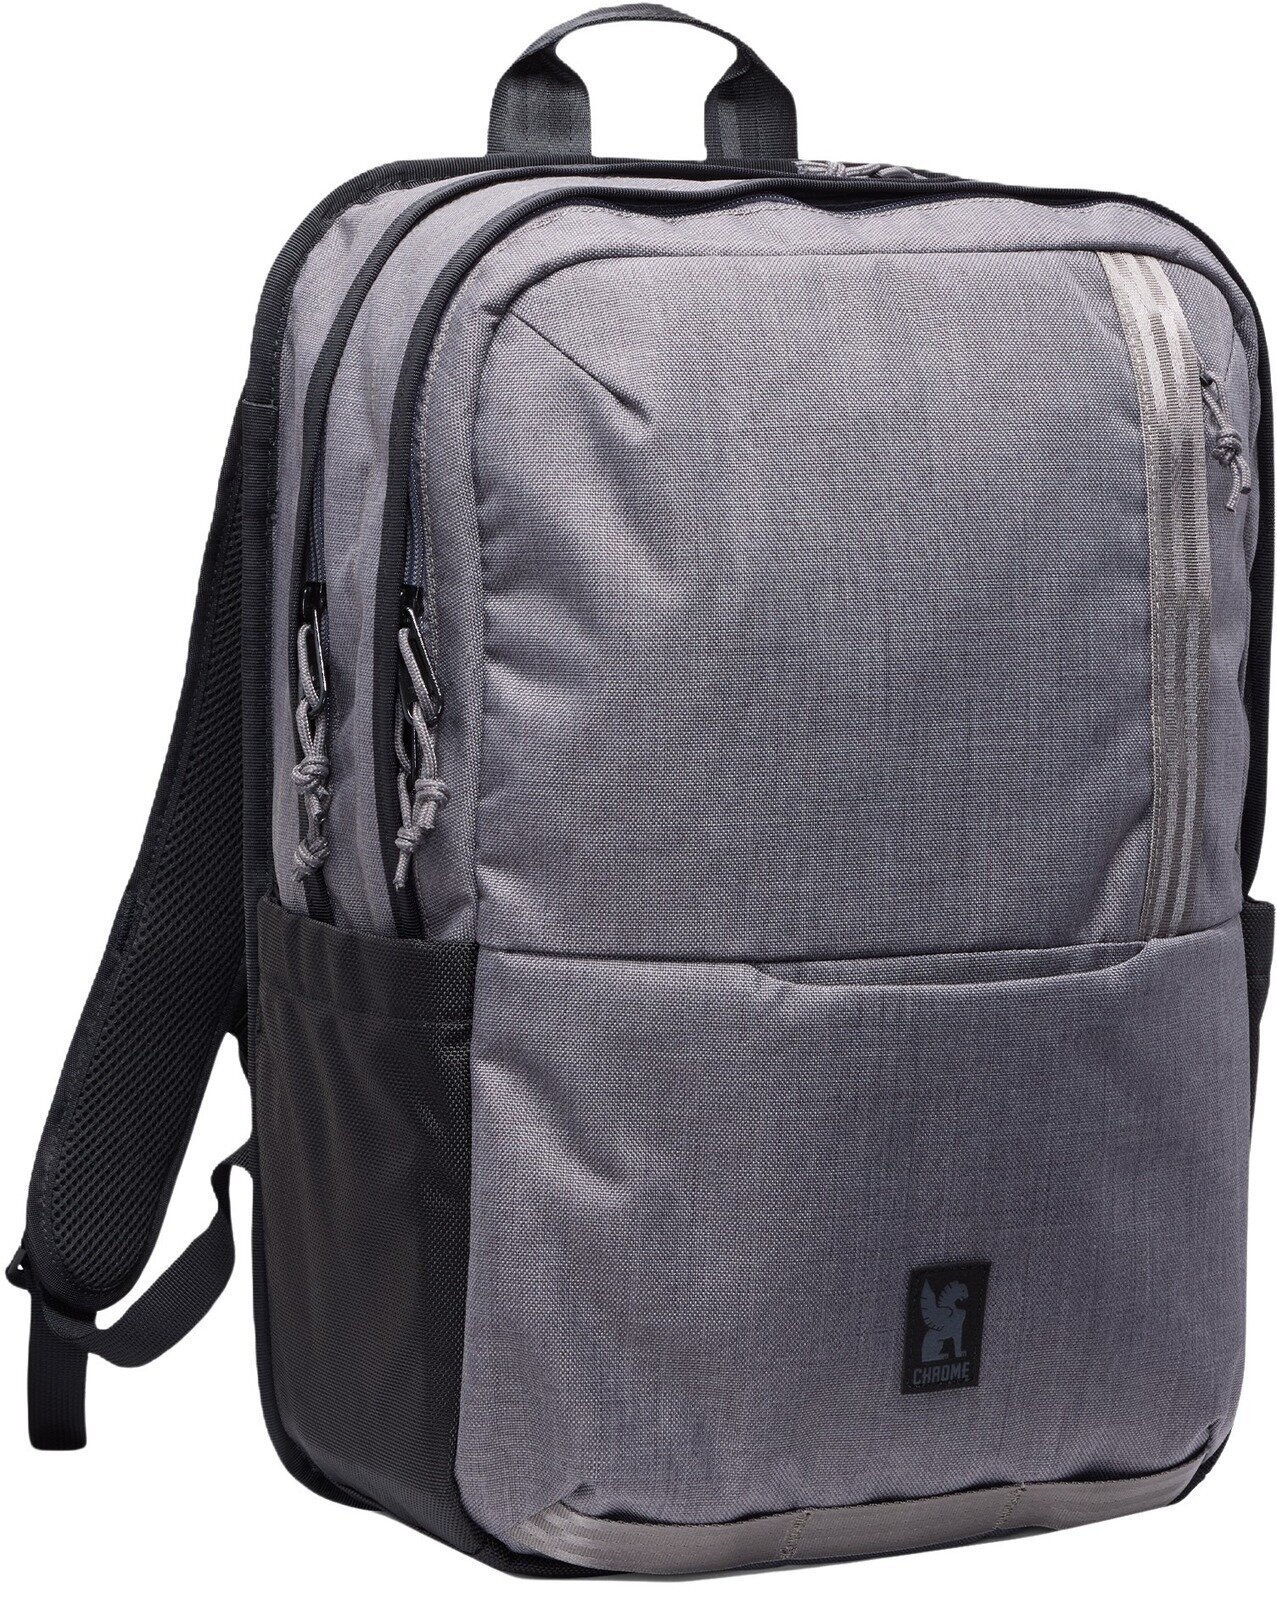 Lifestyle sac à dos / Sac Chrome Hawes Backpack Castlerock Twill 26 L Sac à dos